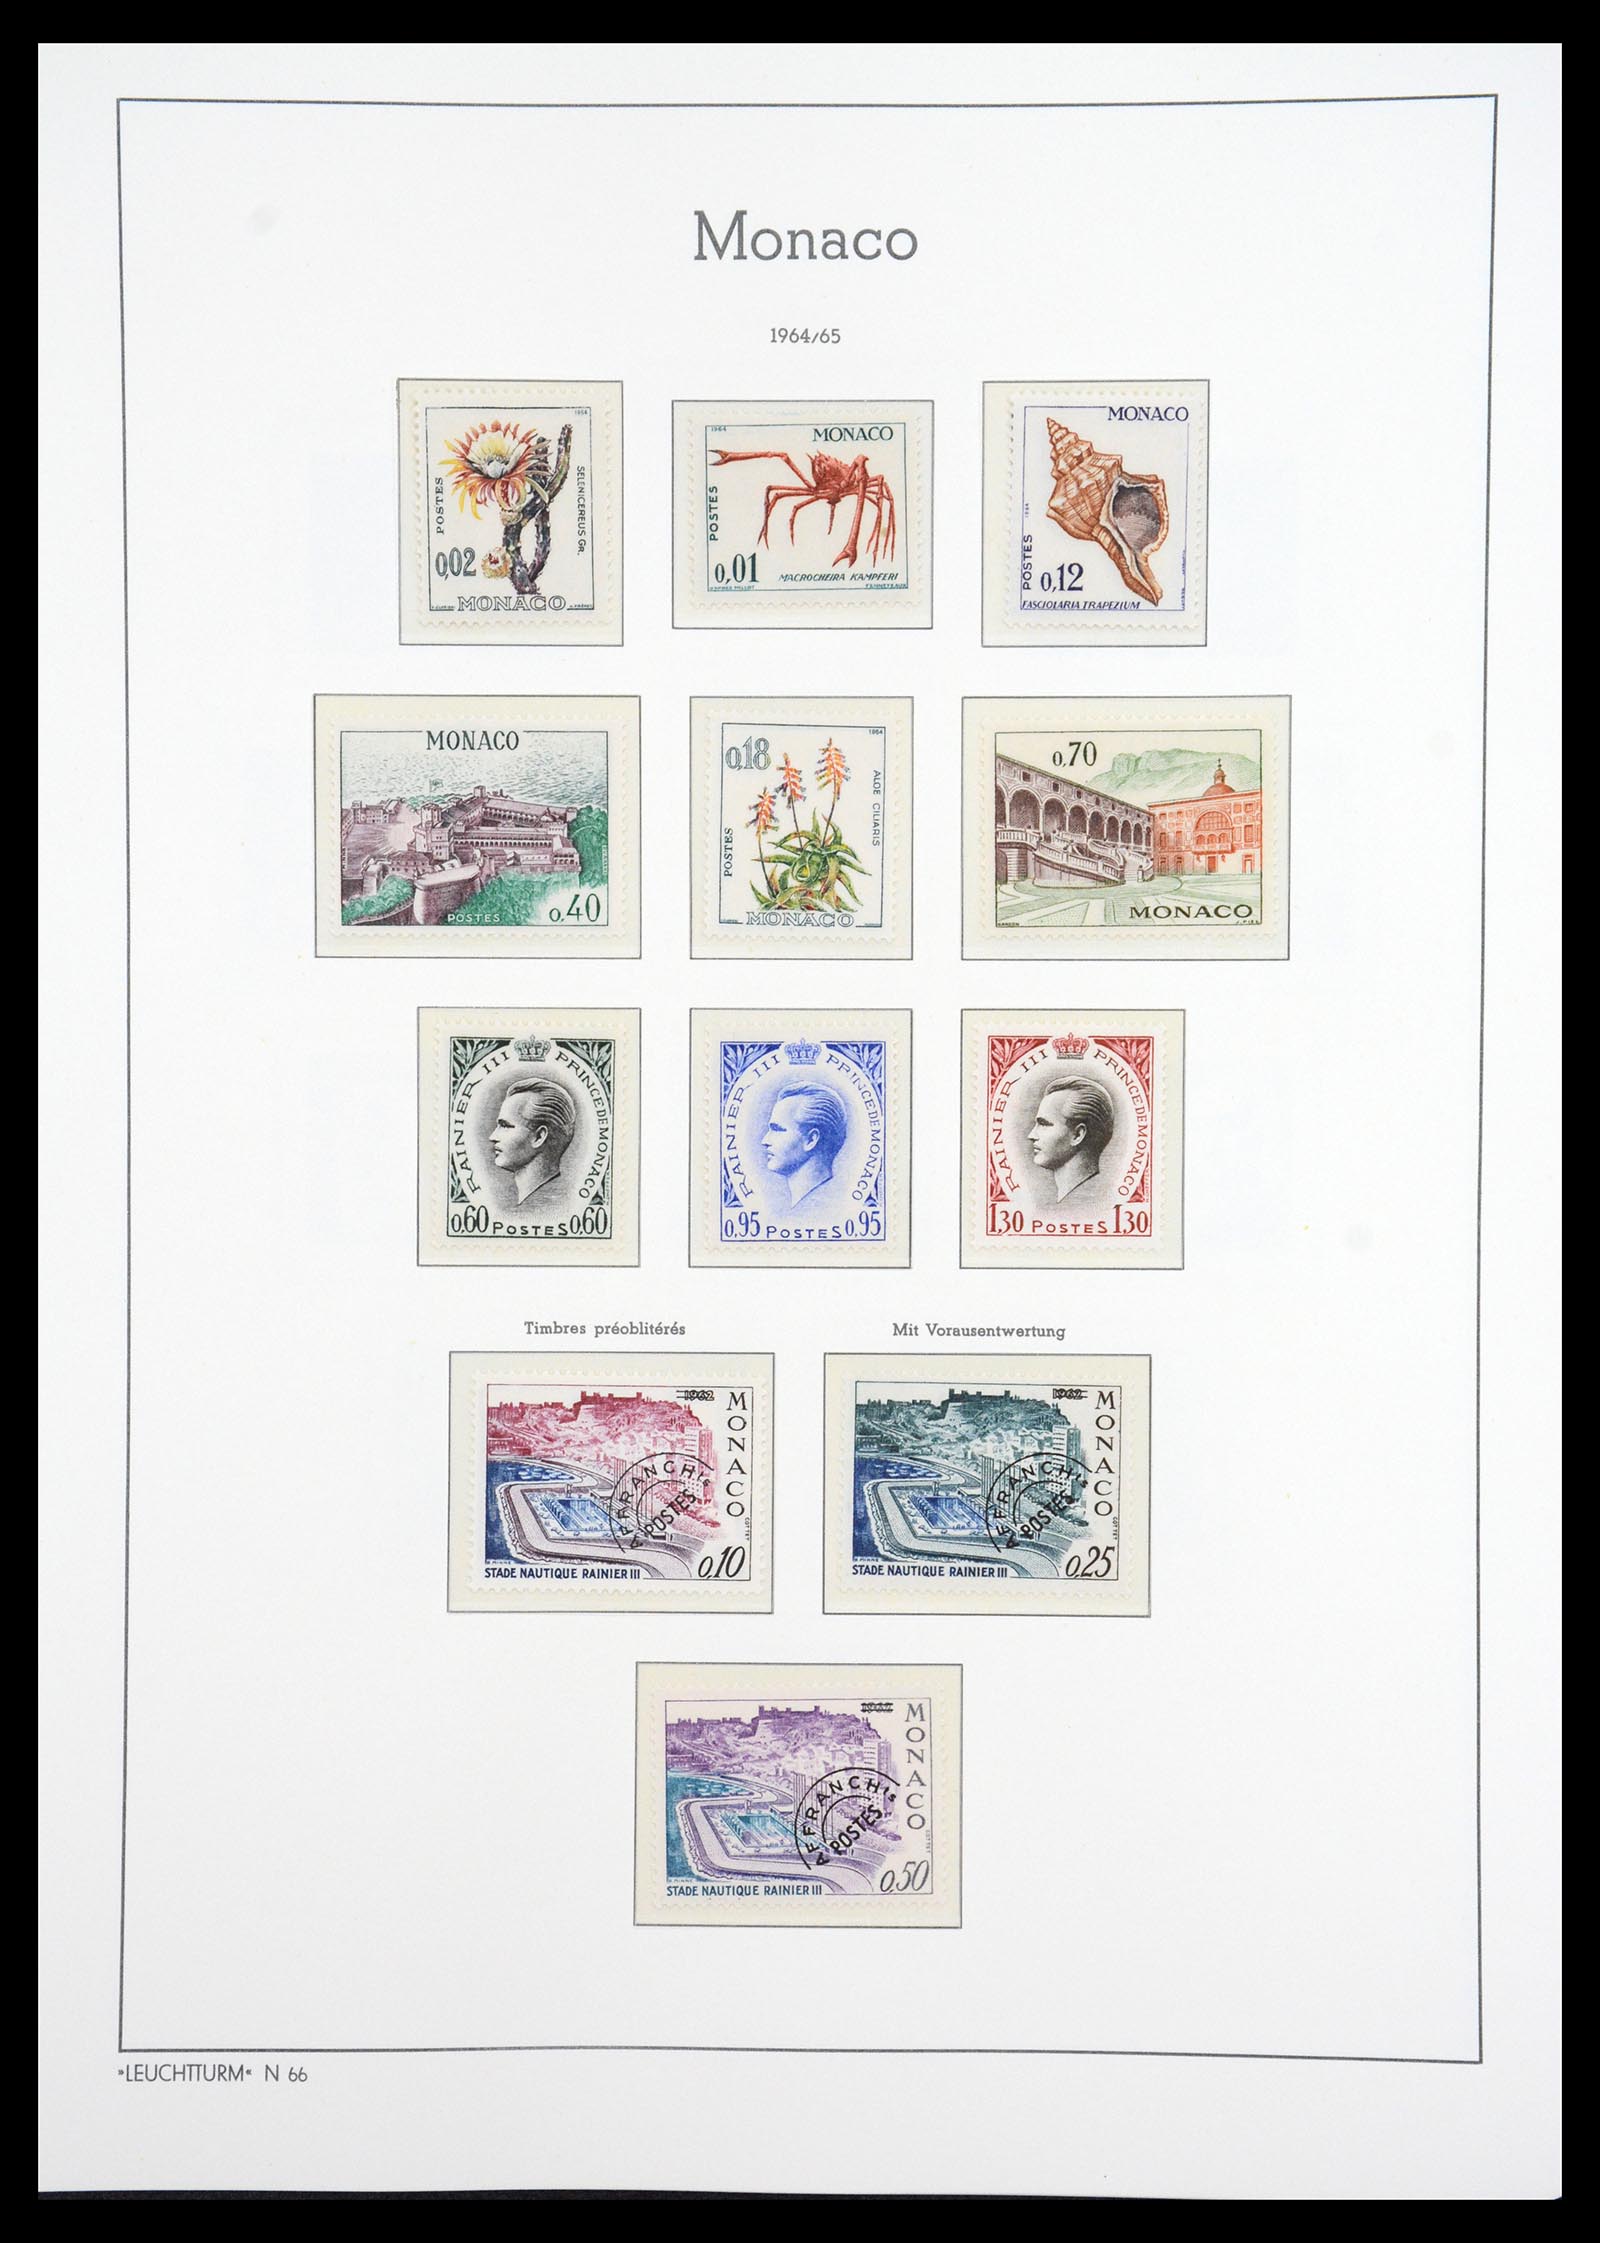 36735 089 - Stamp collection 36735 Monaco 1885-1966.